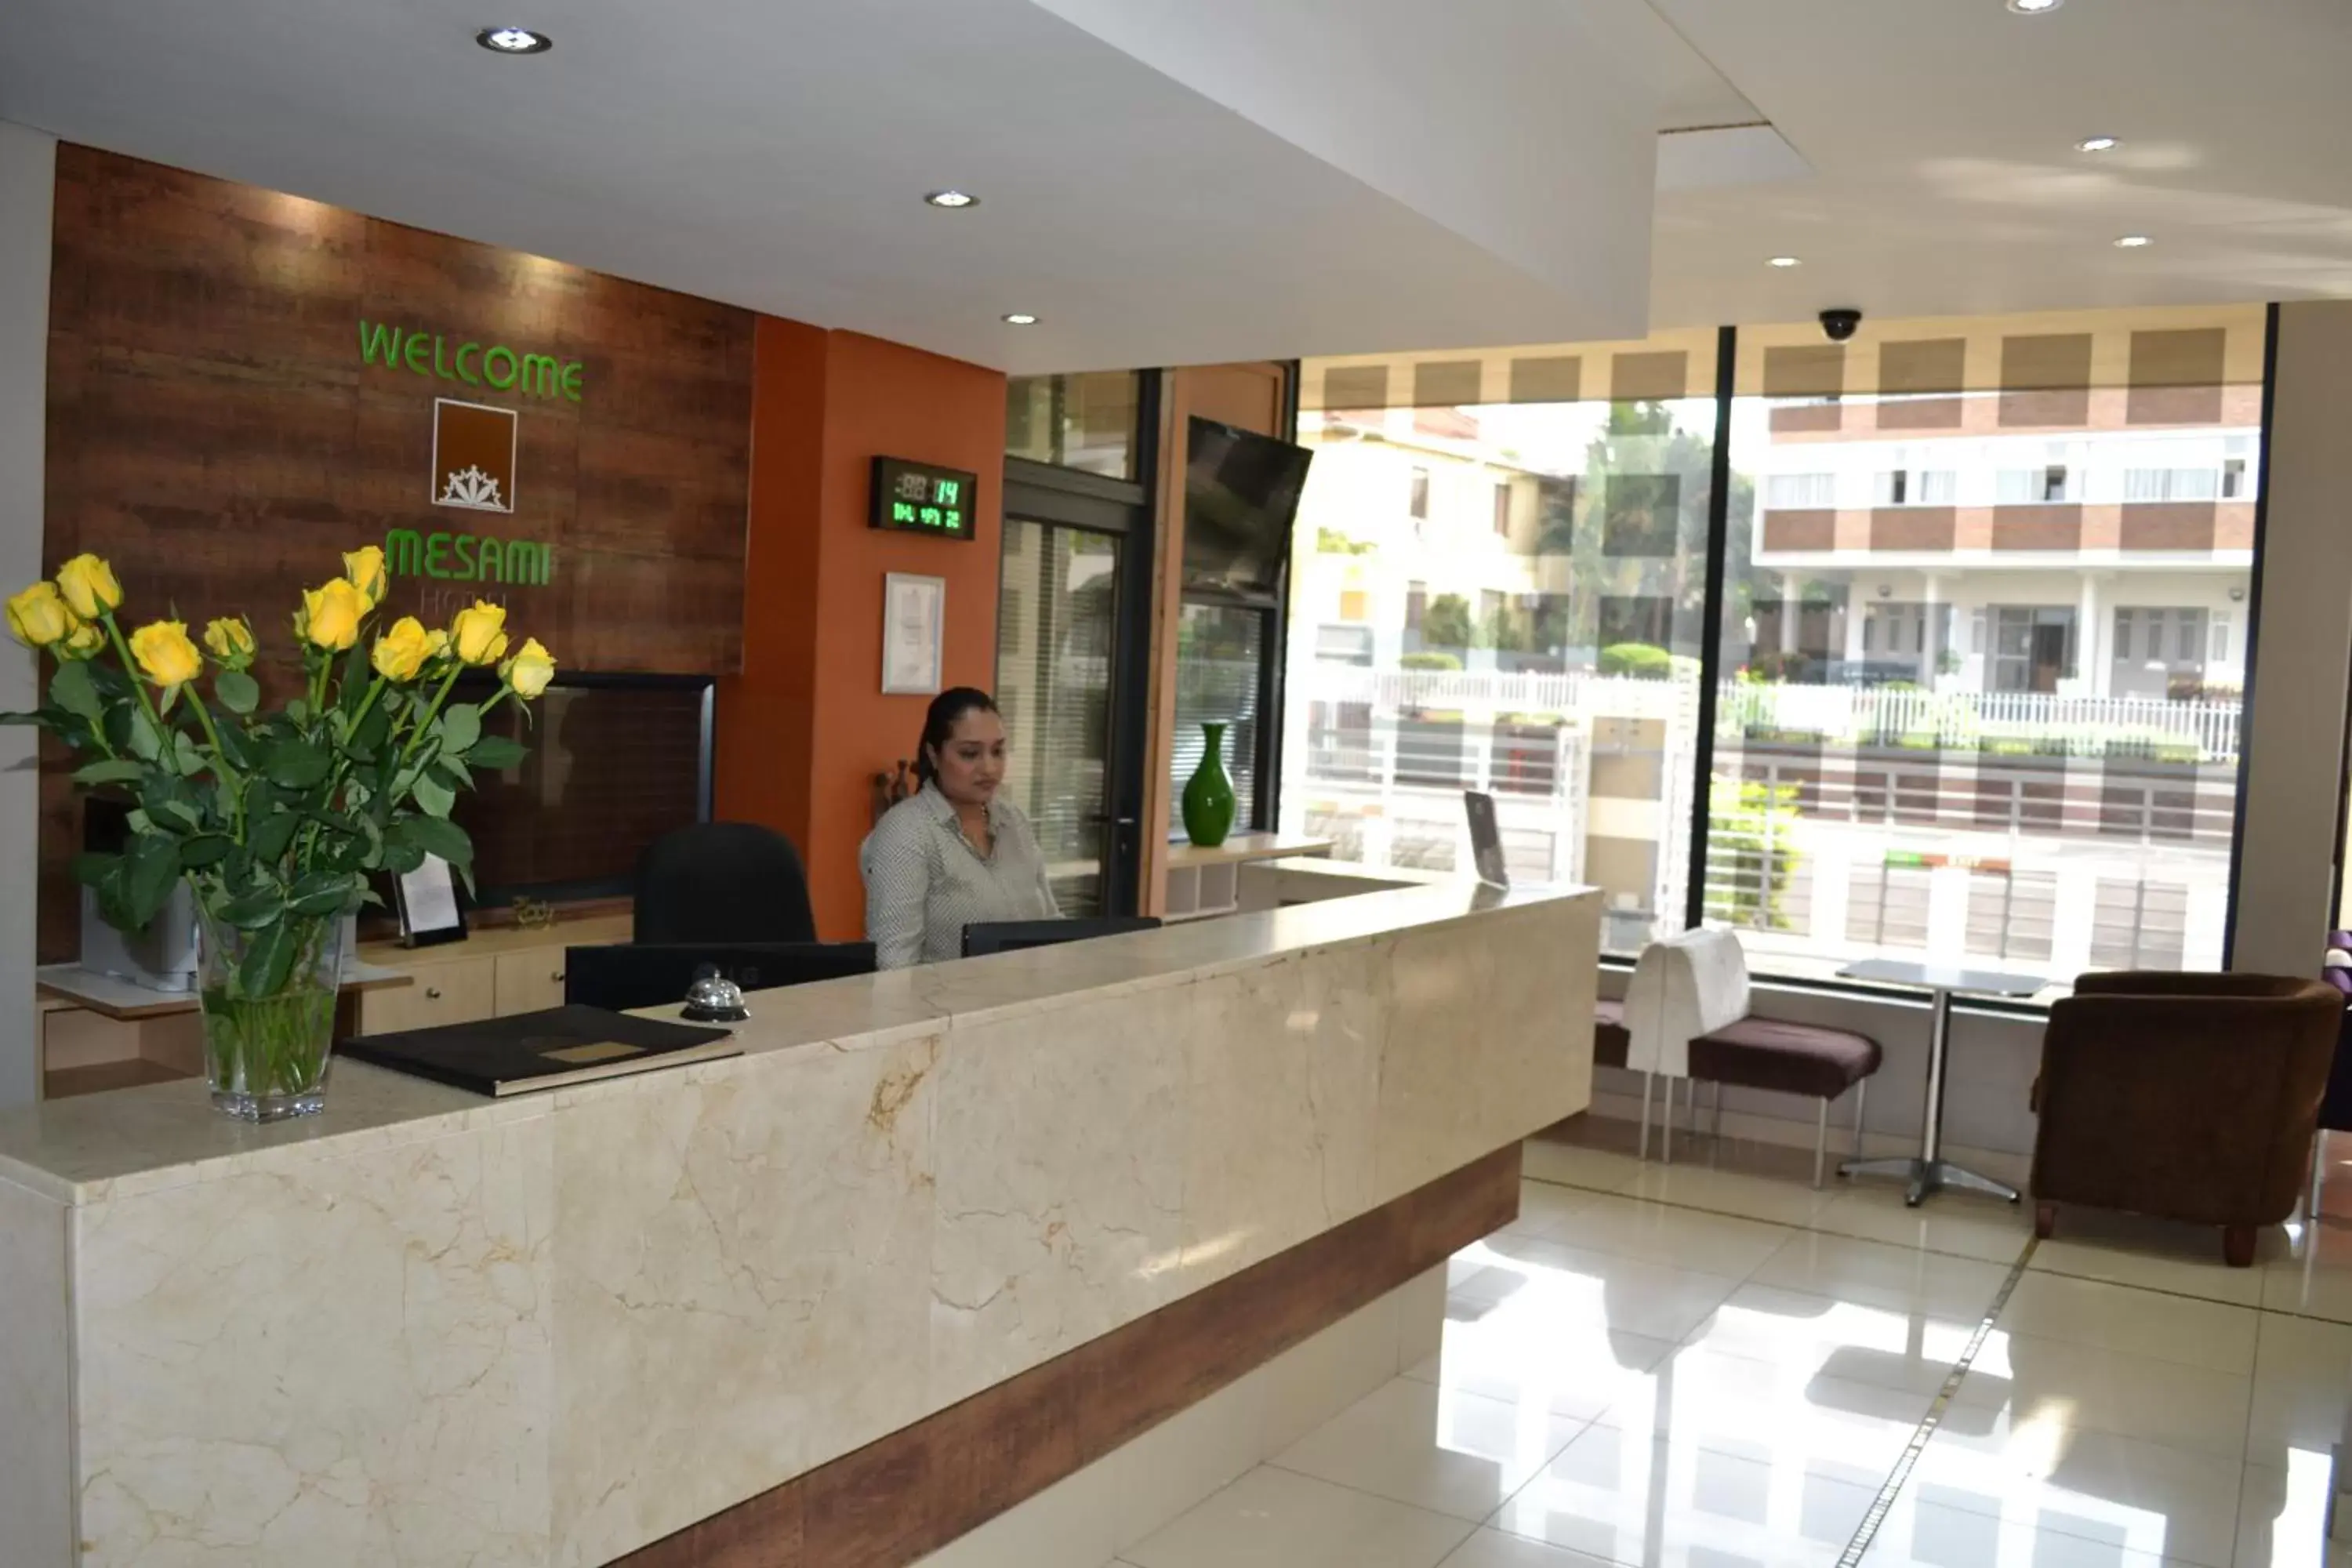 Lobby or reception in Mesami Hotel